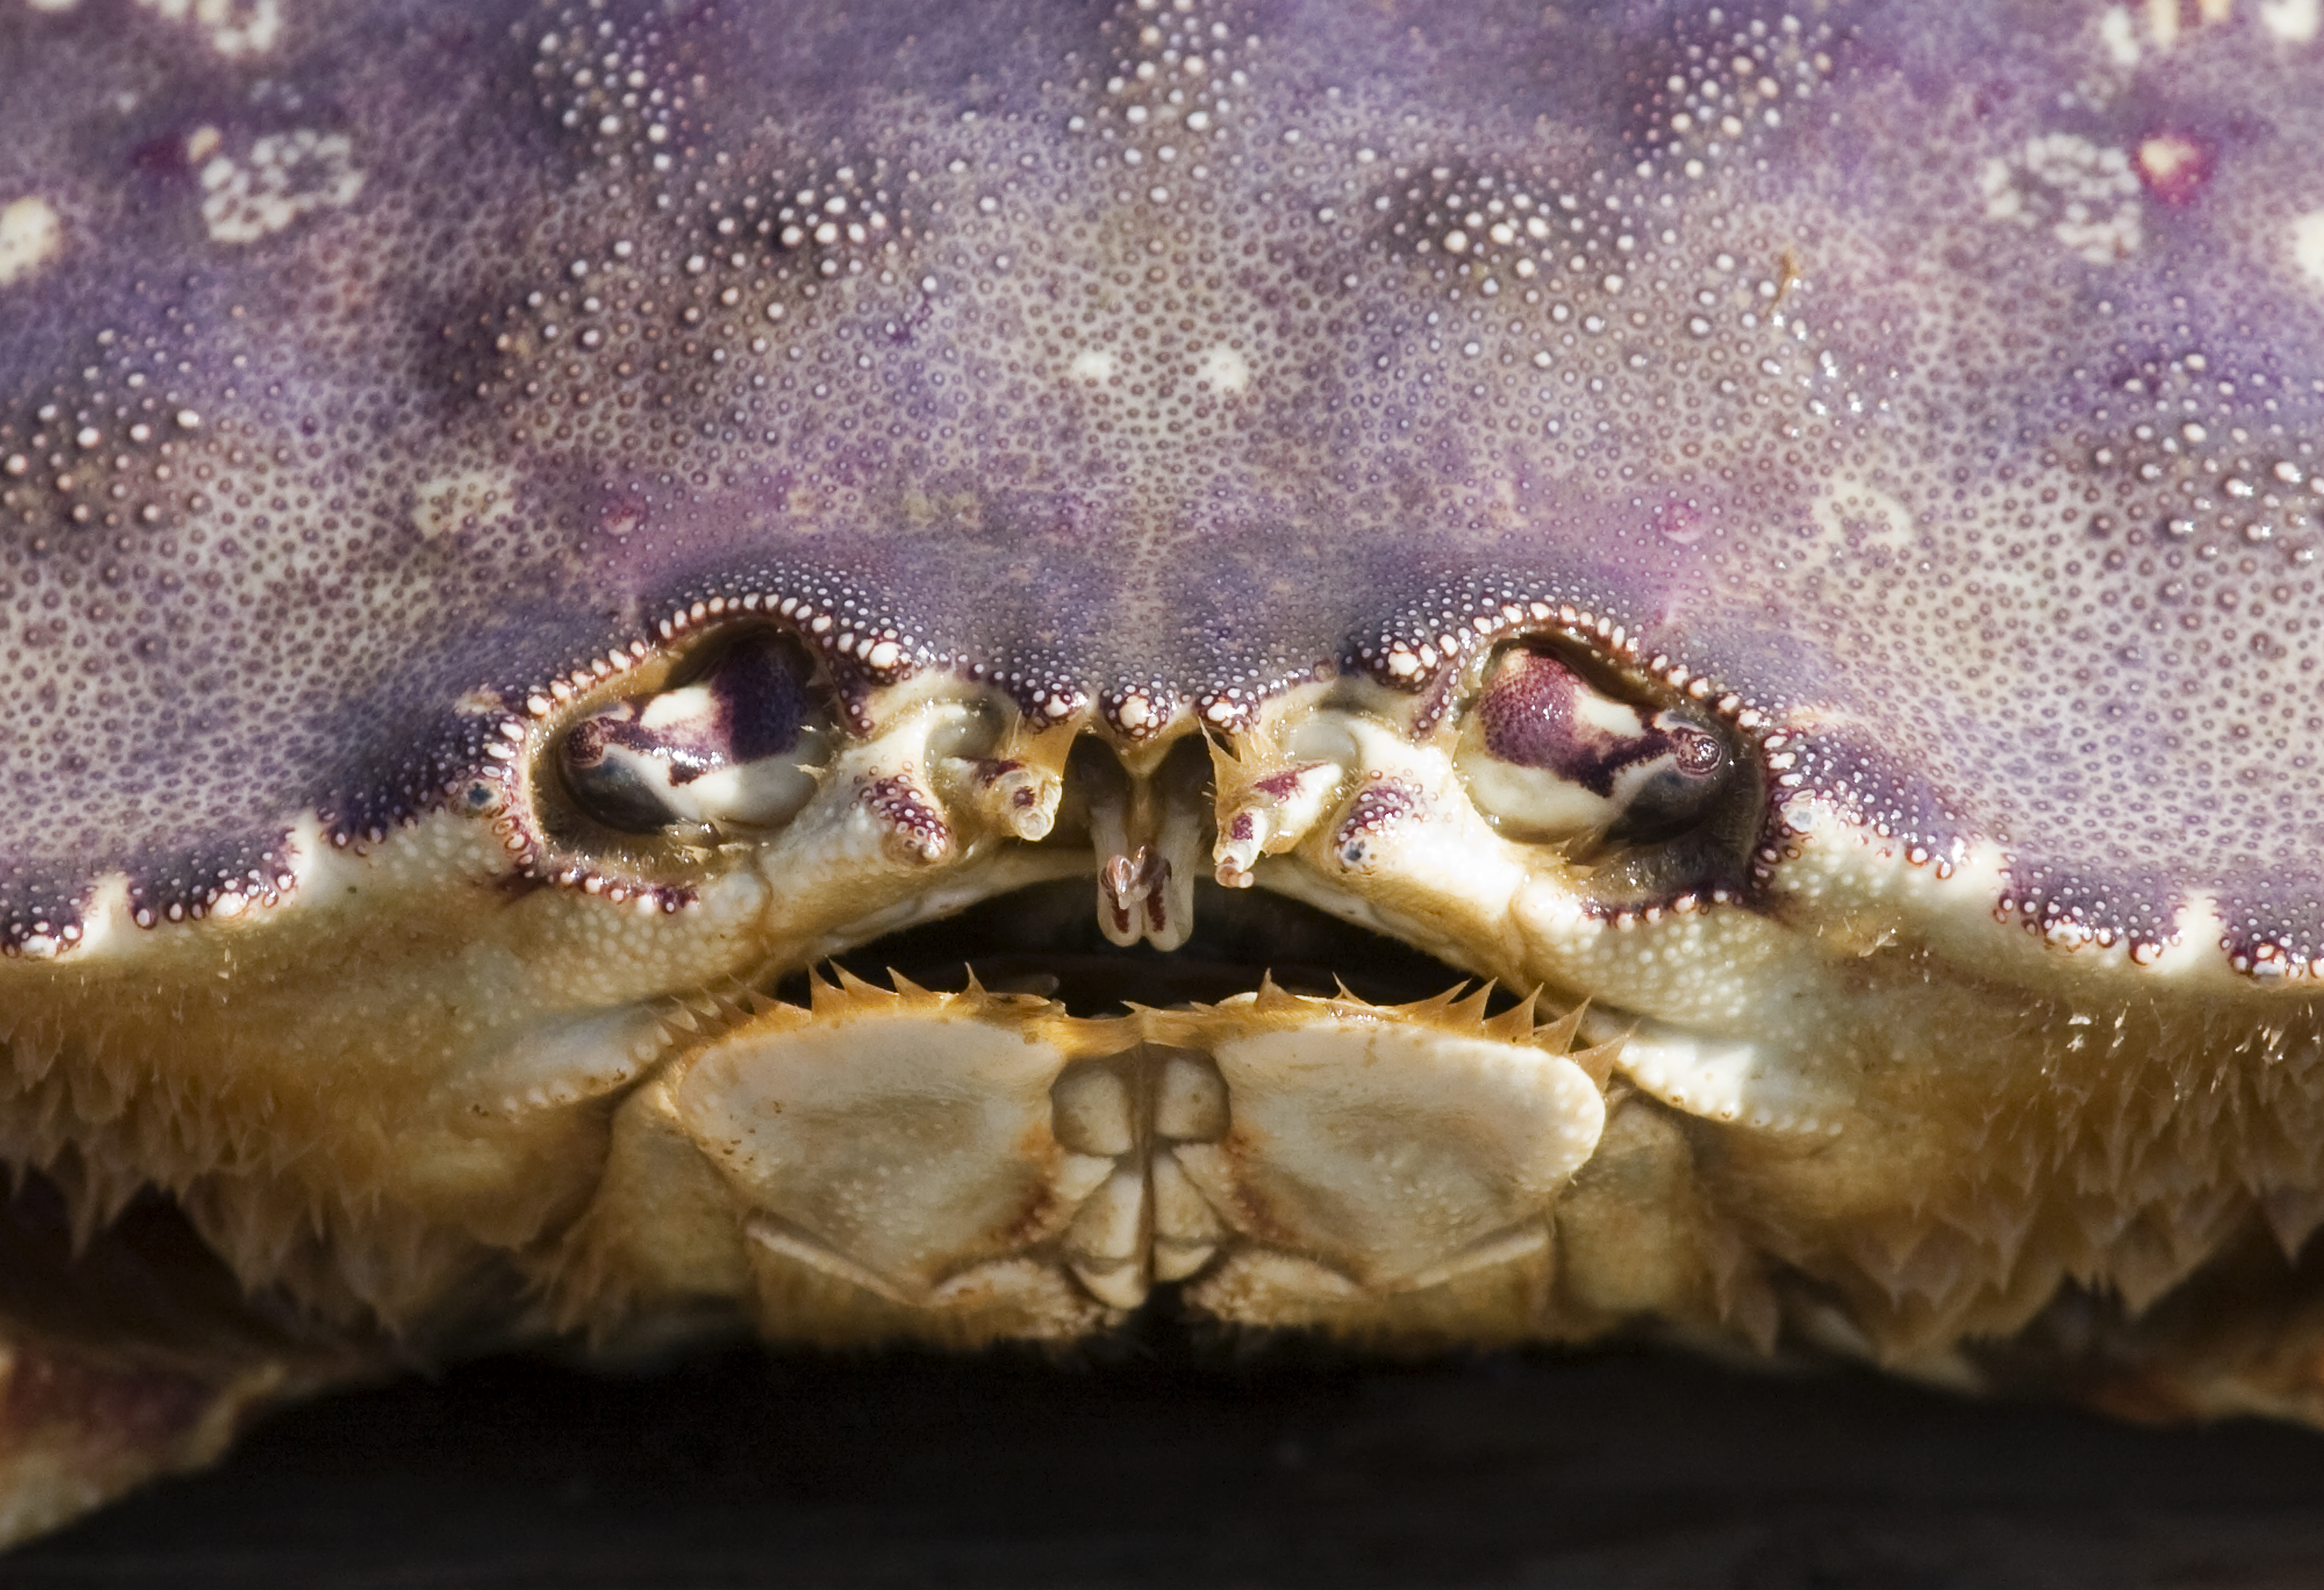 File:Dungeness crab face closeup.jpg - Wikipedia